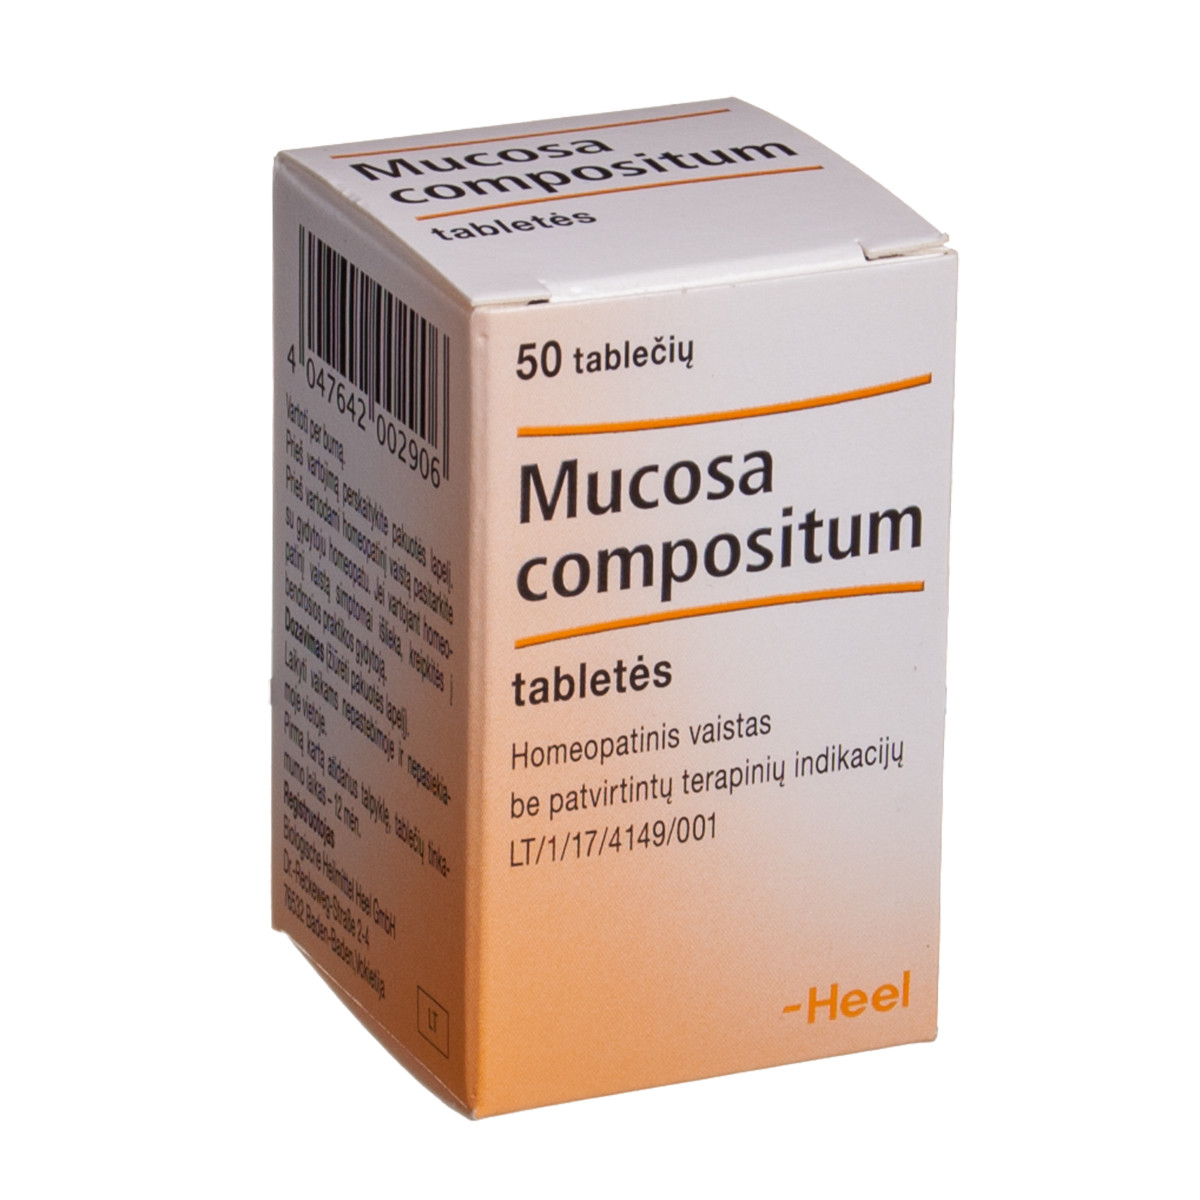 MUCOSA COMPOSITUM, tabletės, N50